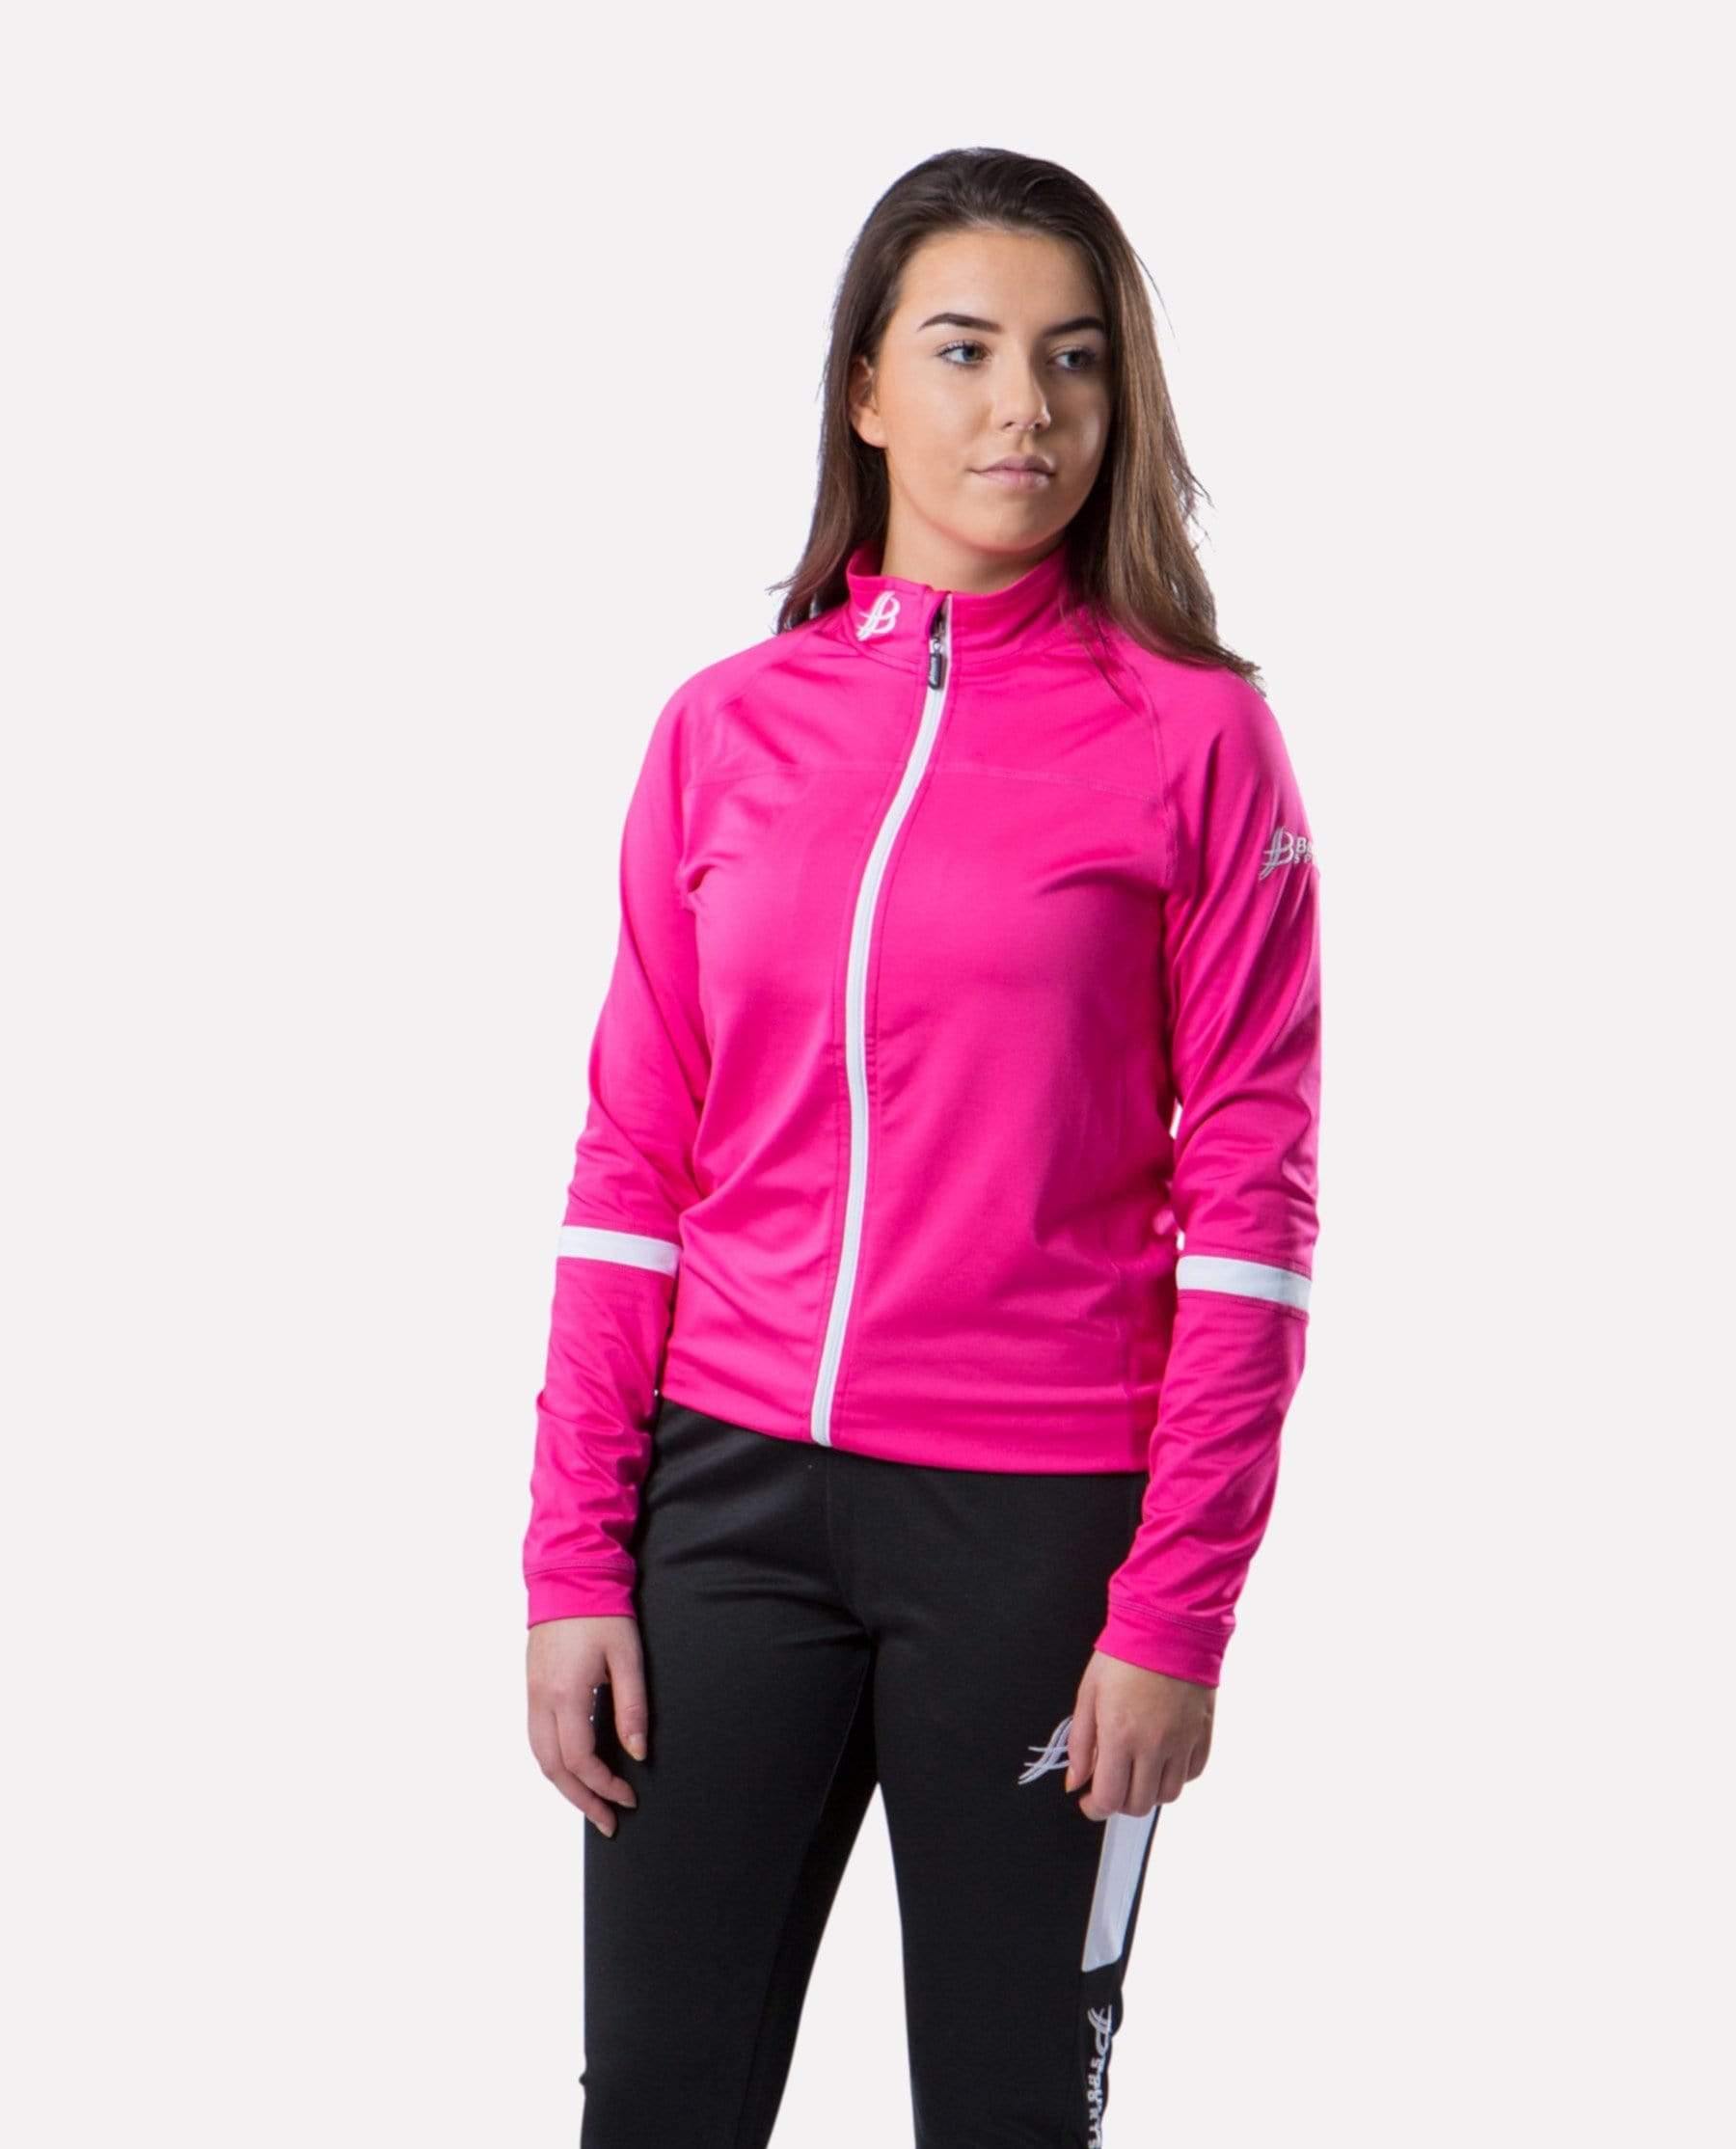 ALPHA Kids Full Zip (Pink/White) - Bourke Sports Limited